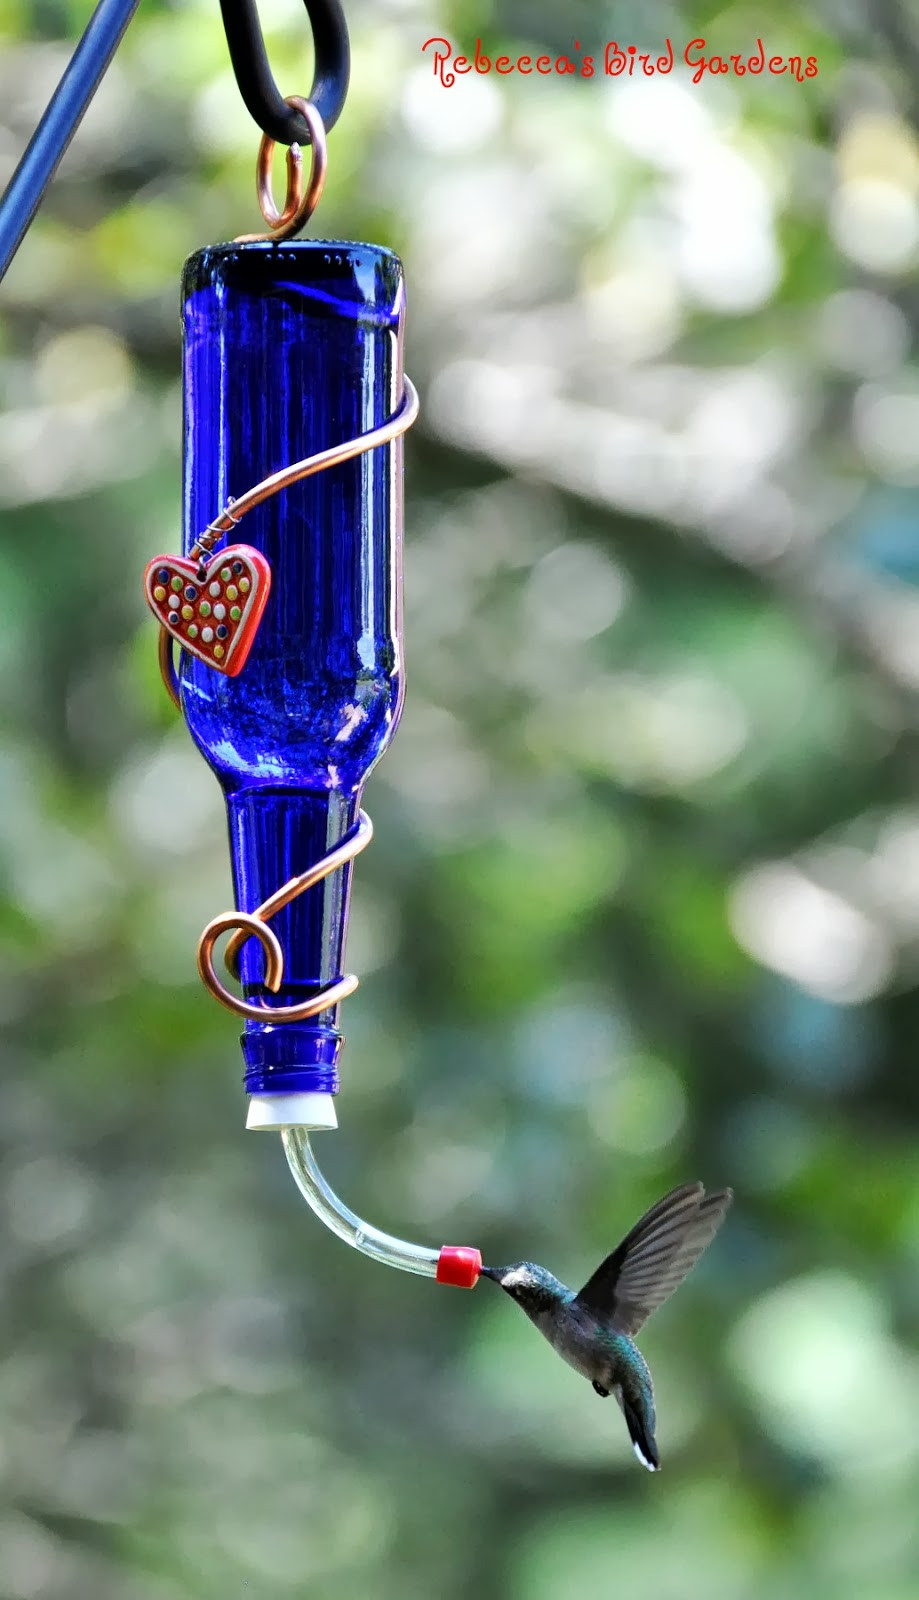 Best ideas about DIY Wine Bottle Hummingbird Feeder
. Save or Pin Rebecca s Bird Gardens Blog DIY Fruit and Hummingbird Feeders Now.